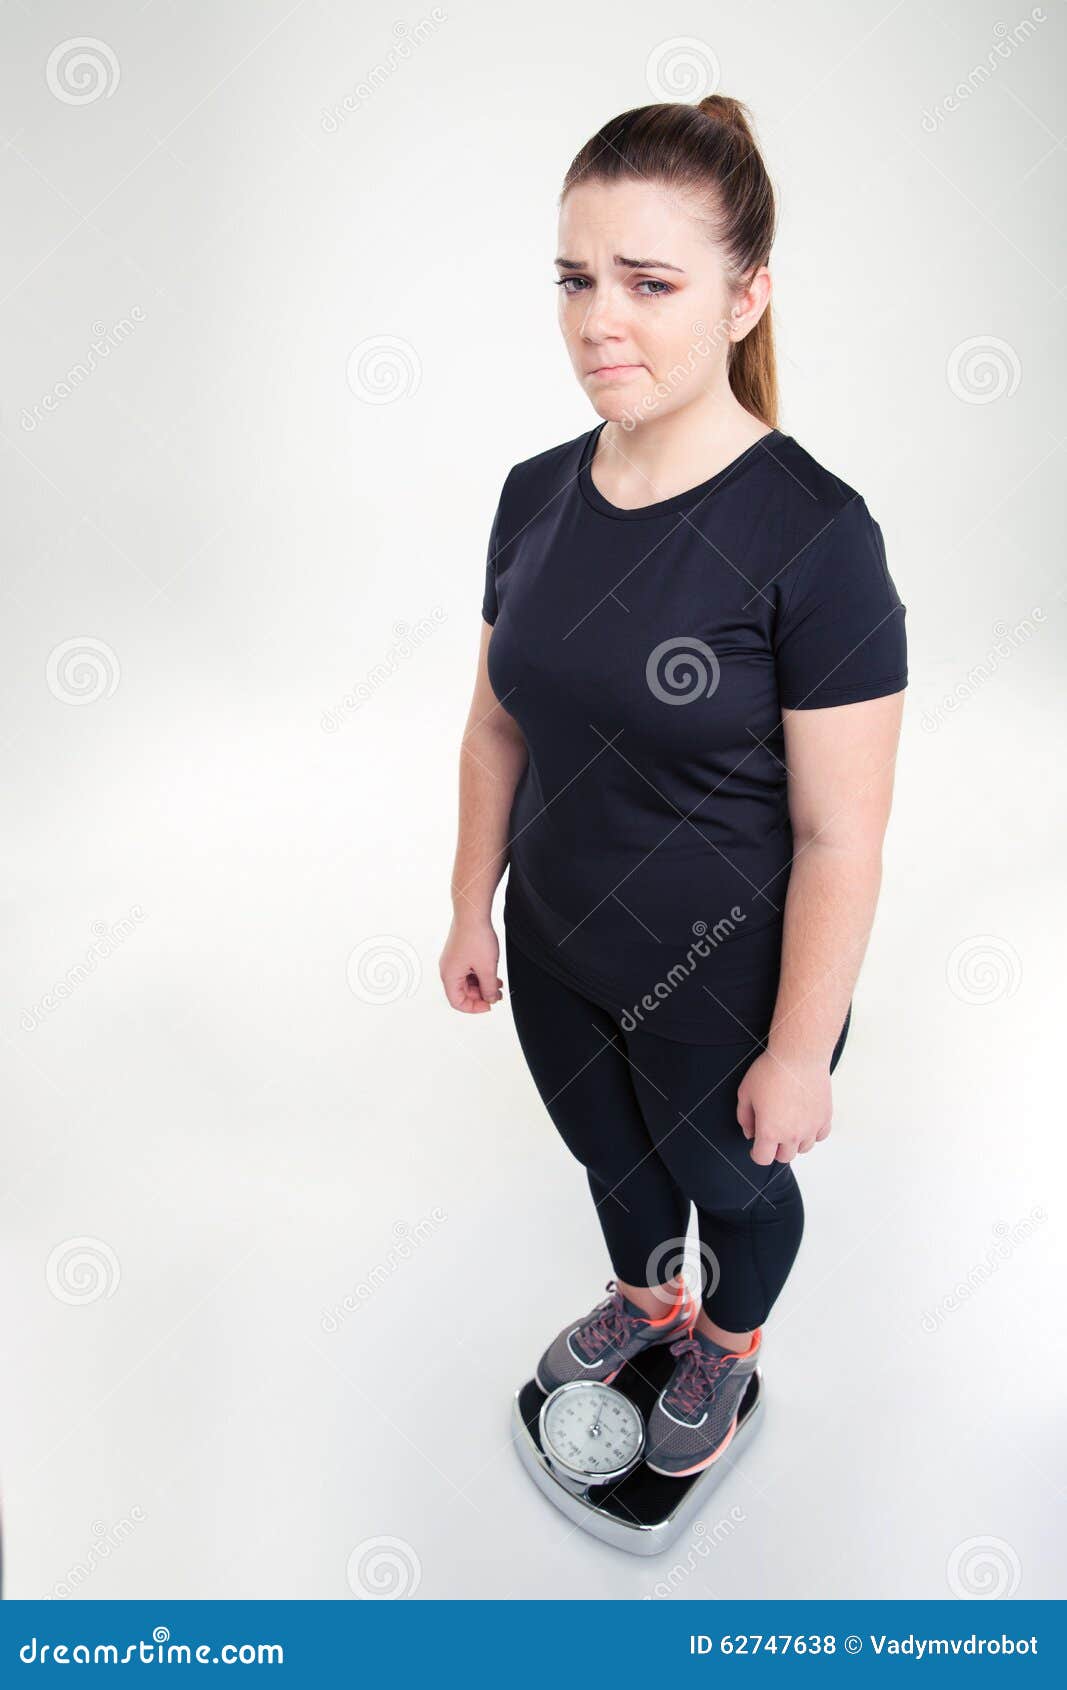 Fat woman standing